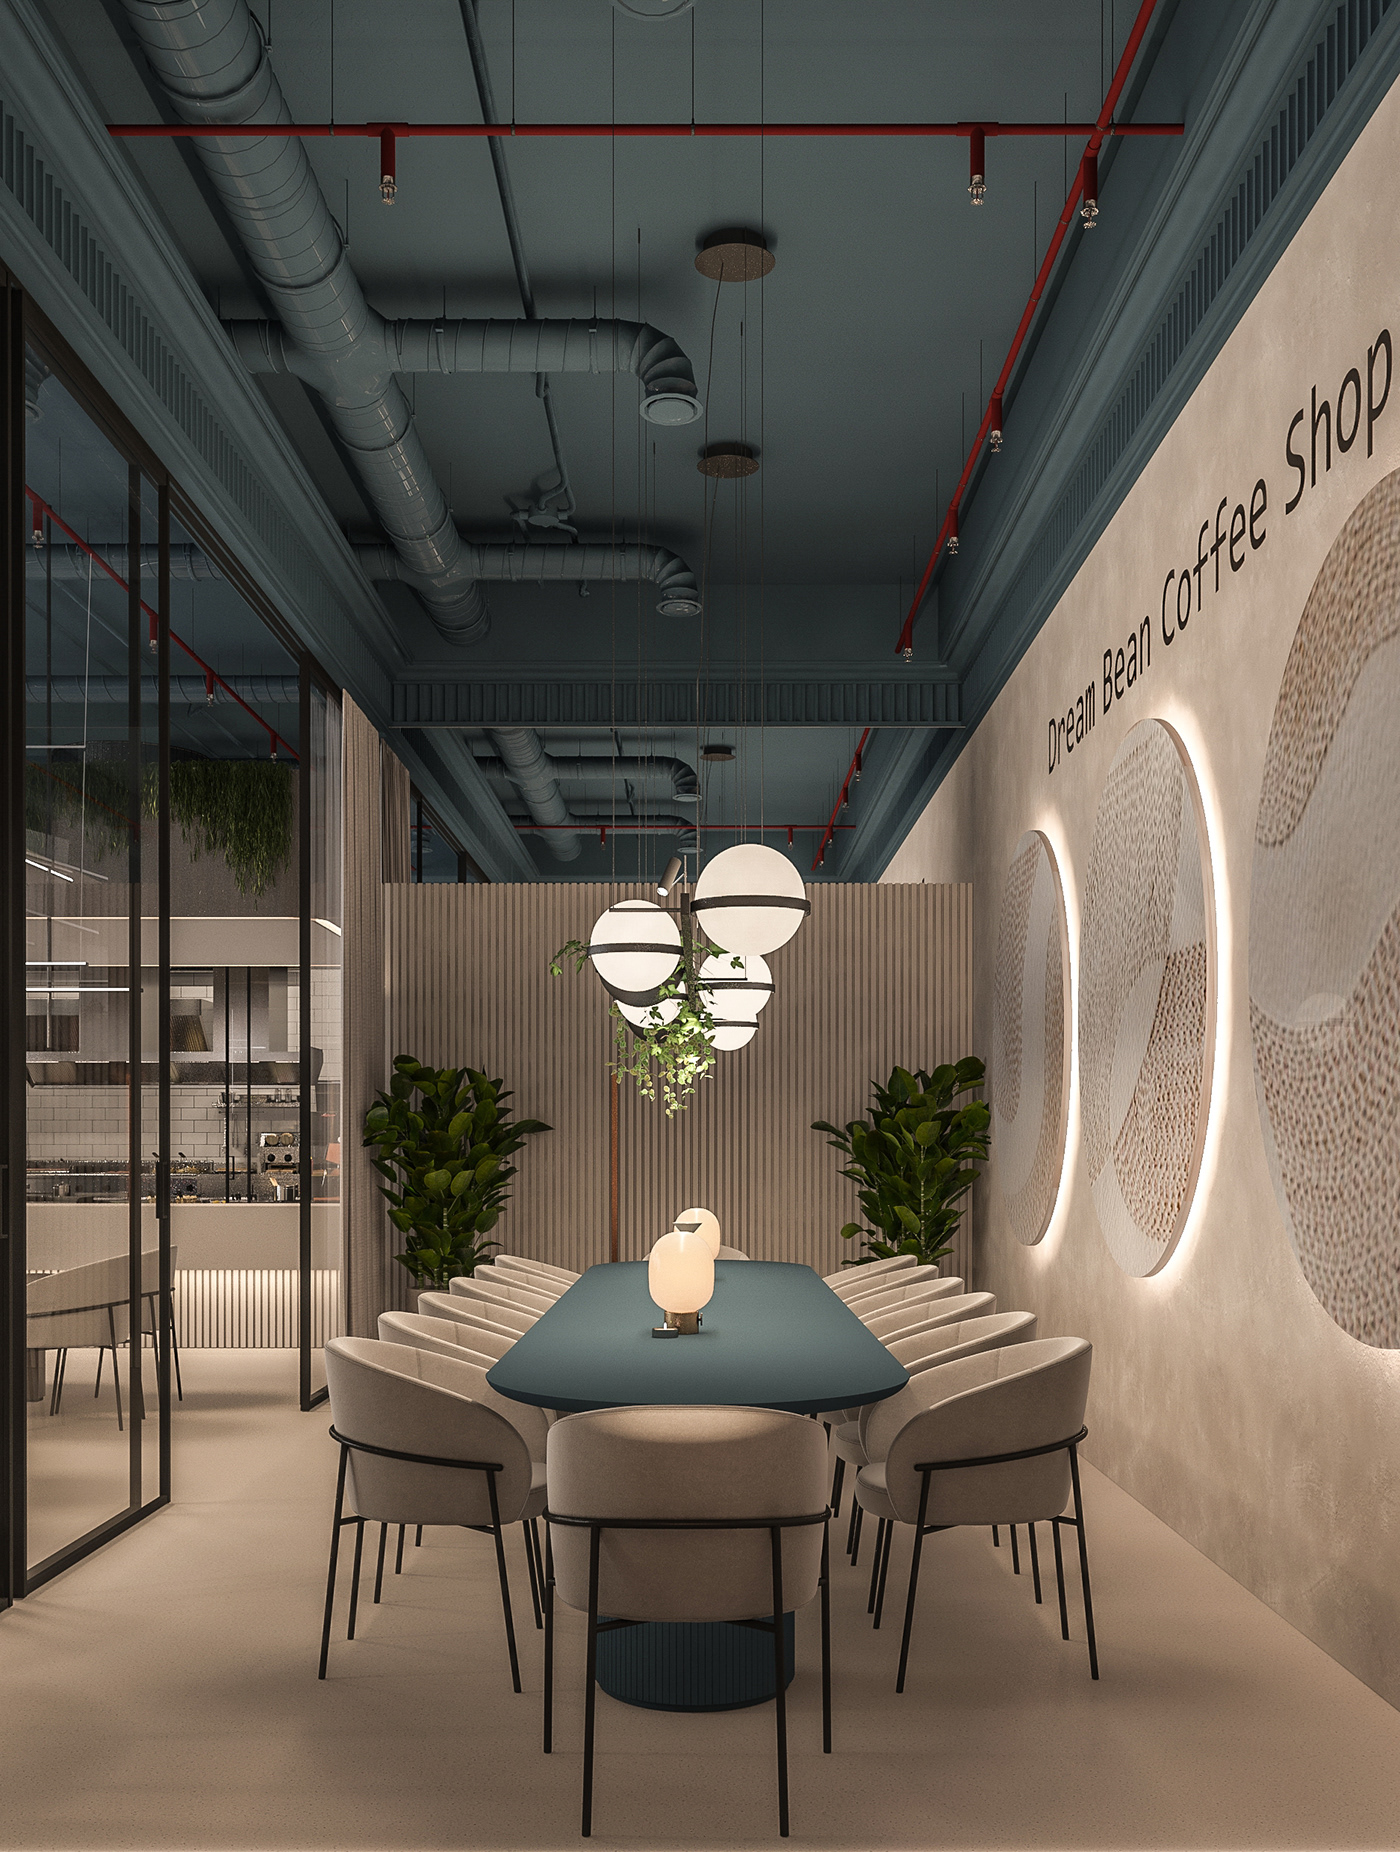 art blue Coffee coffeeshop design Interior light rastorant shop Travel